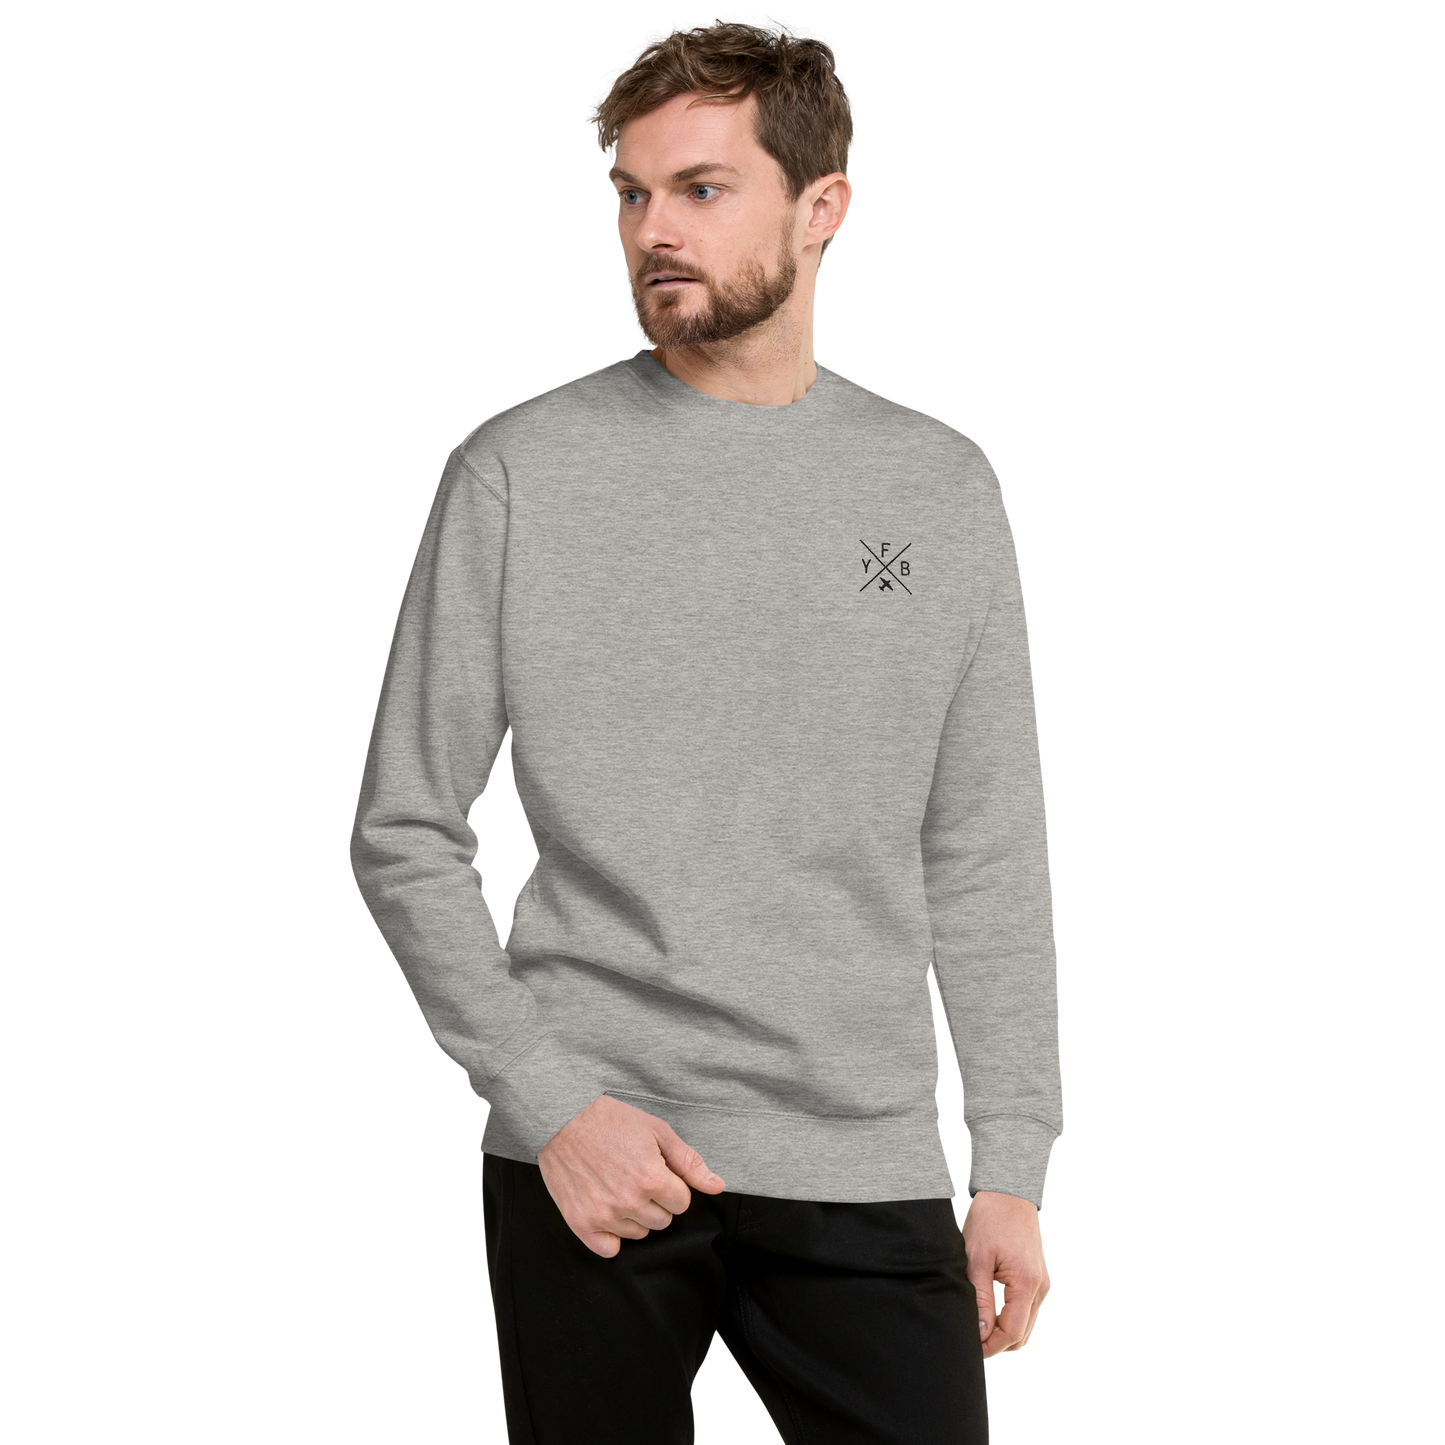 YHM Designs - YFB Iqaluit Premium Sweatshirt - Crossed-X Design with Airport Code and Vintage Propliner - Black Embroidery - Image 01